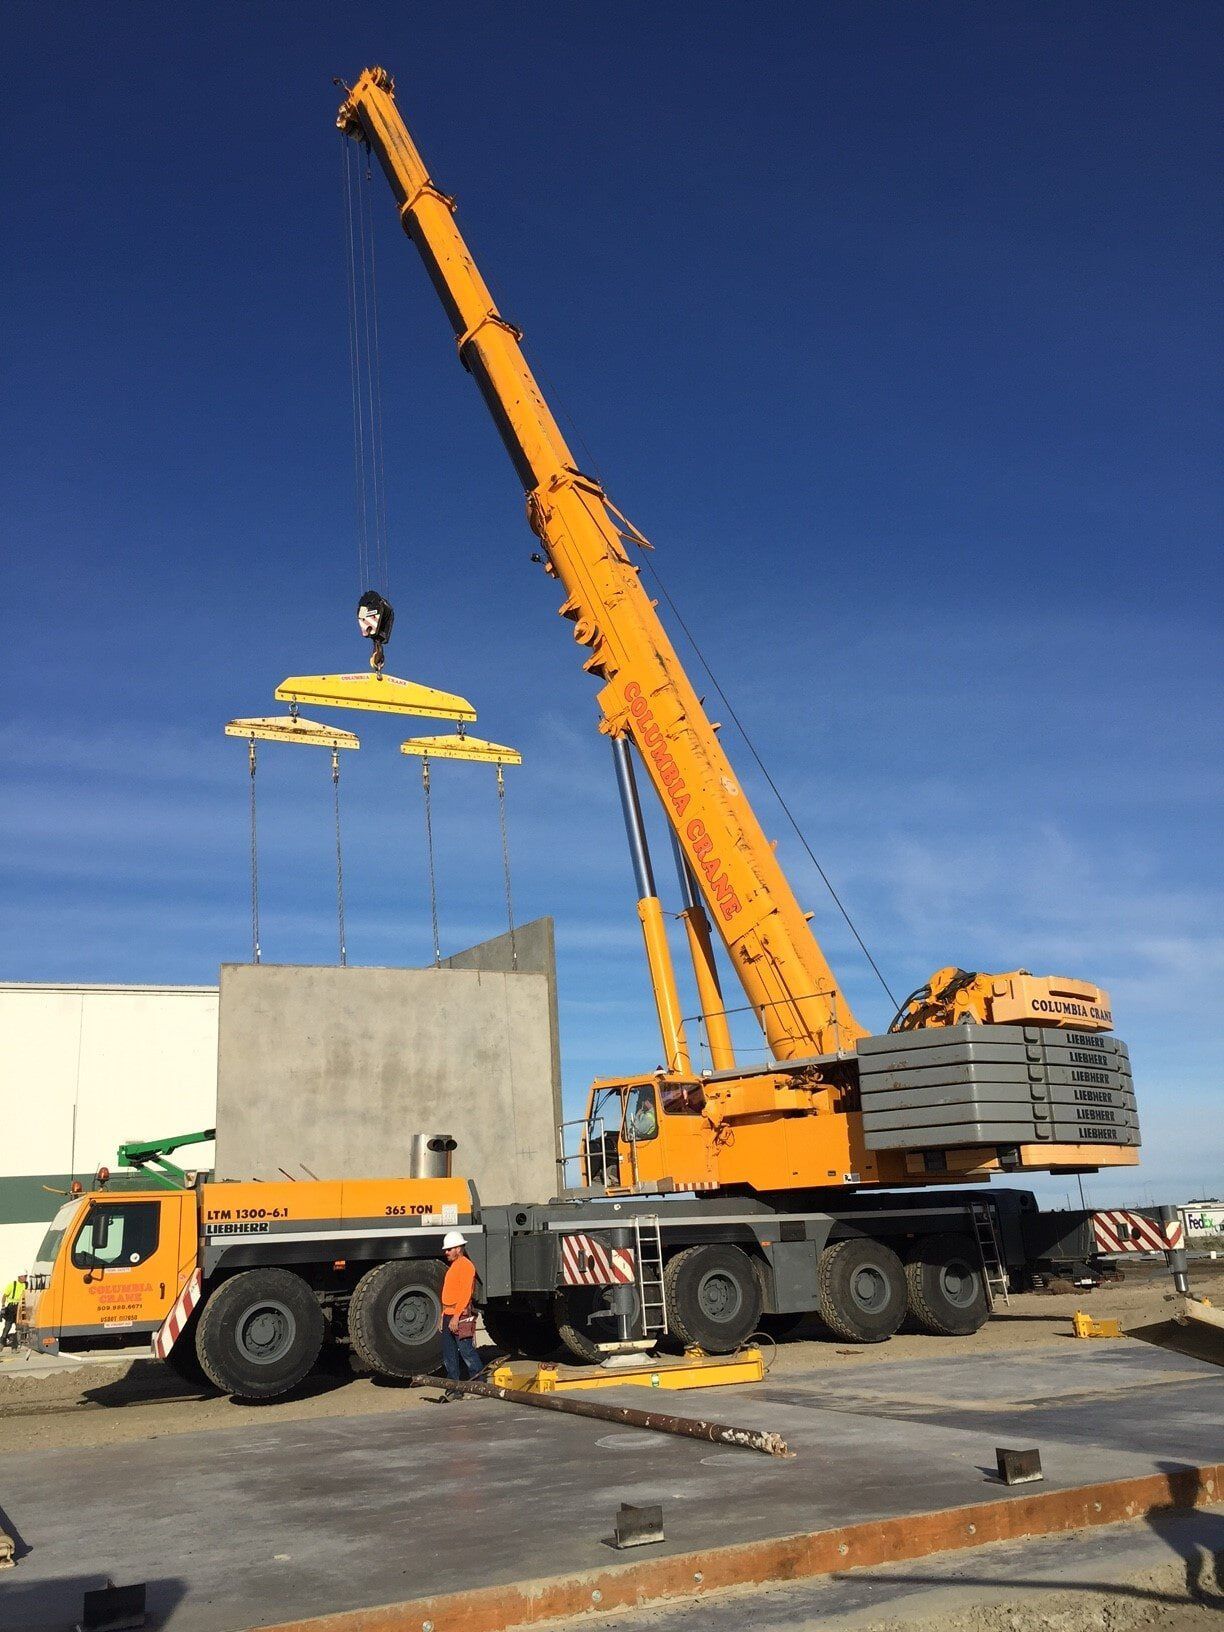 Mobile crane with its boom risen outdoors — Hoisting Equipment in Wenatchee, Washington